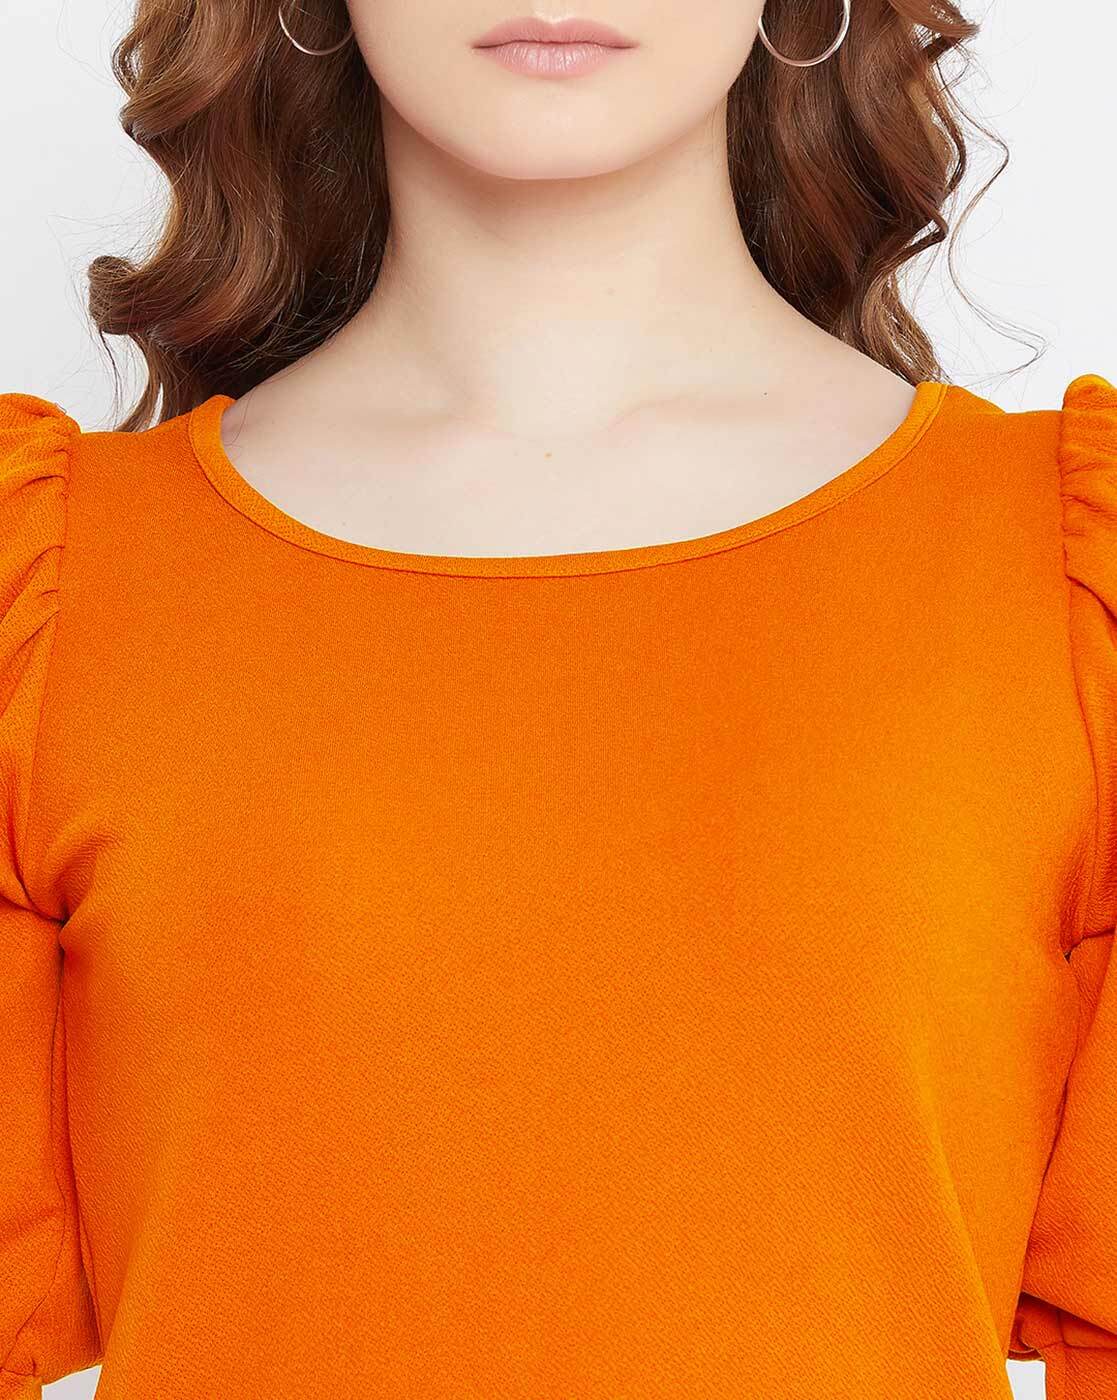 Buy Orange Tops for Women by Uptownie Lite Online